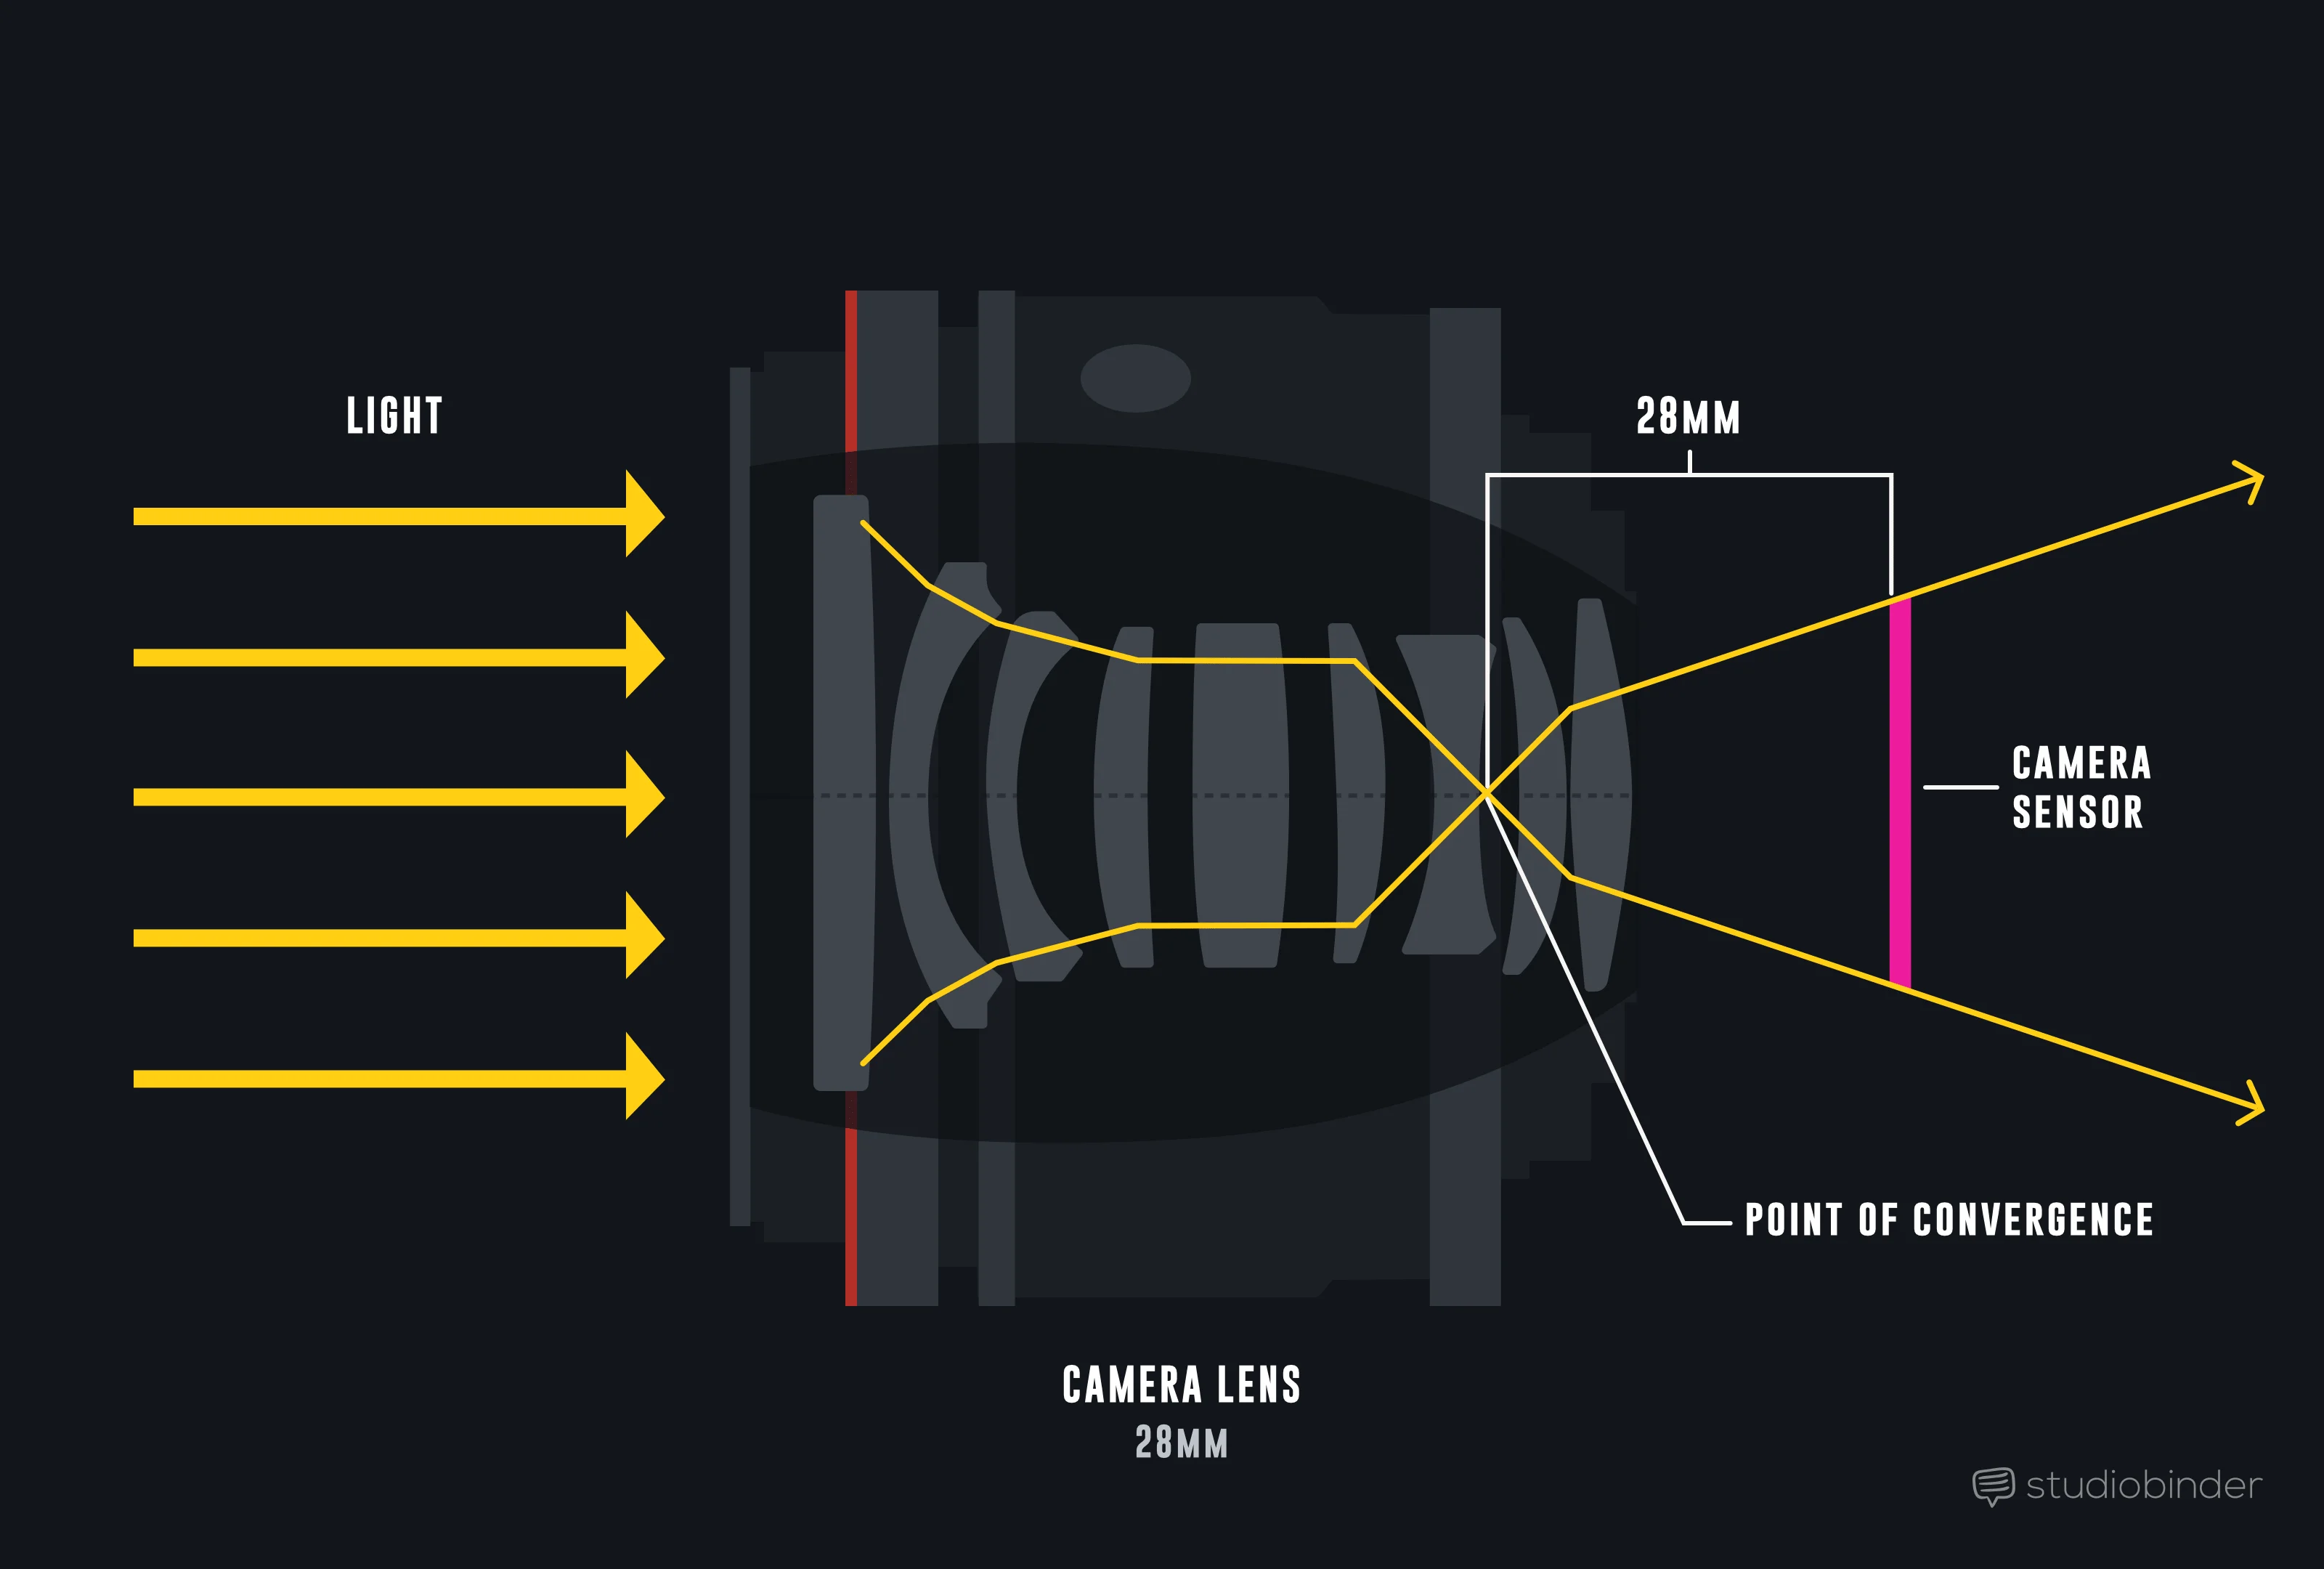 Grand Installeren stijfheid Focal Length: An Easy Guide to Using and Understanding Camera Lenses